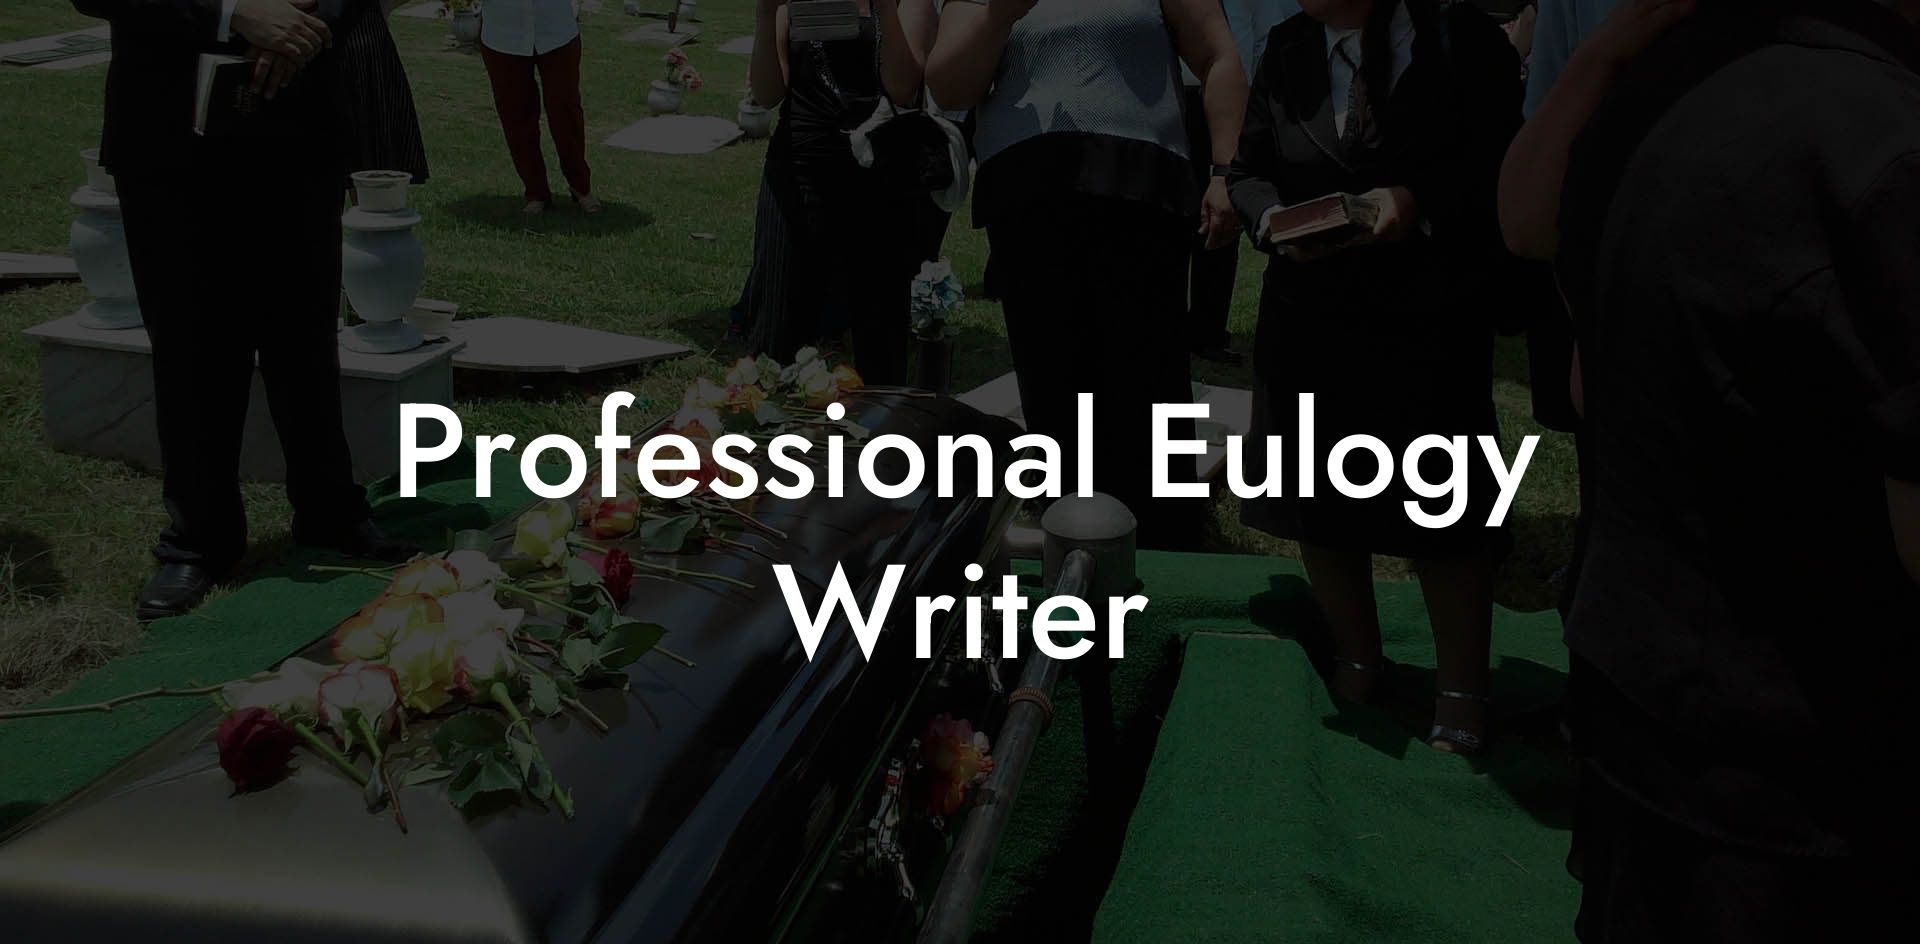 Professional Eulogy Writer